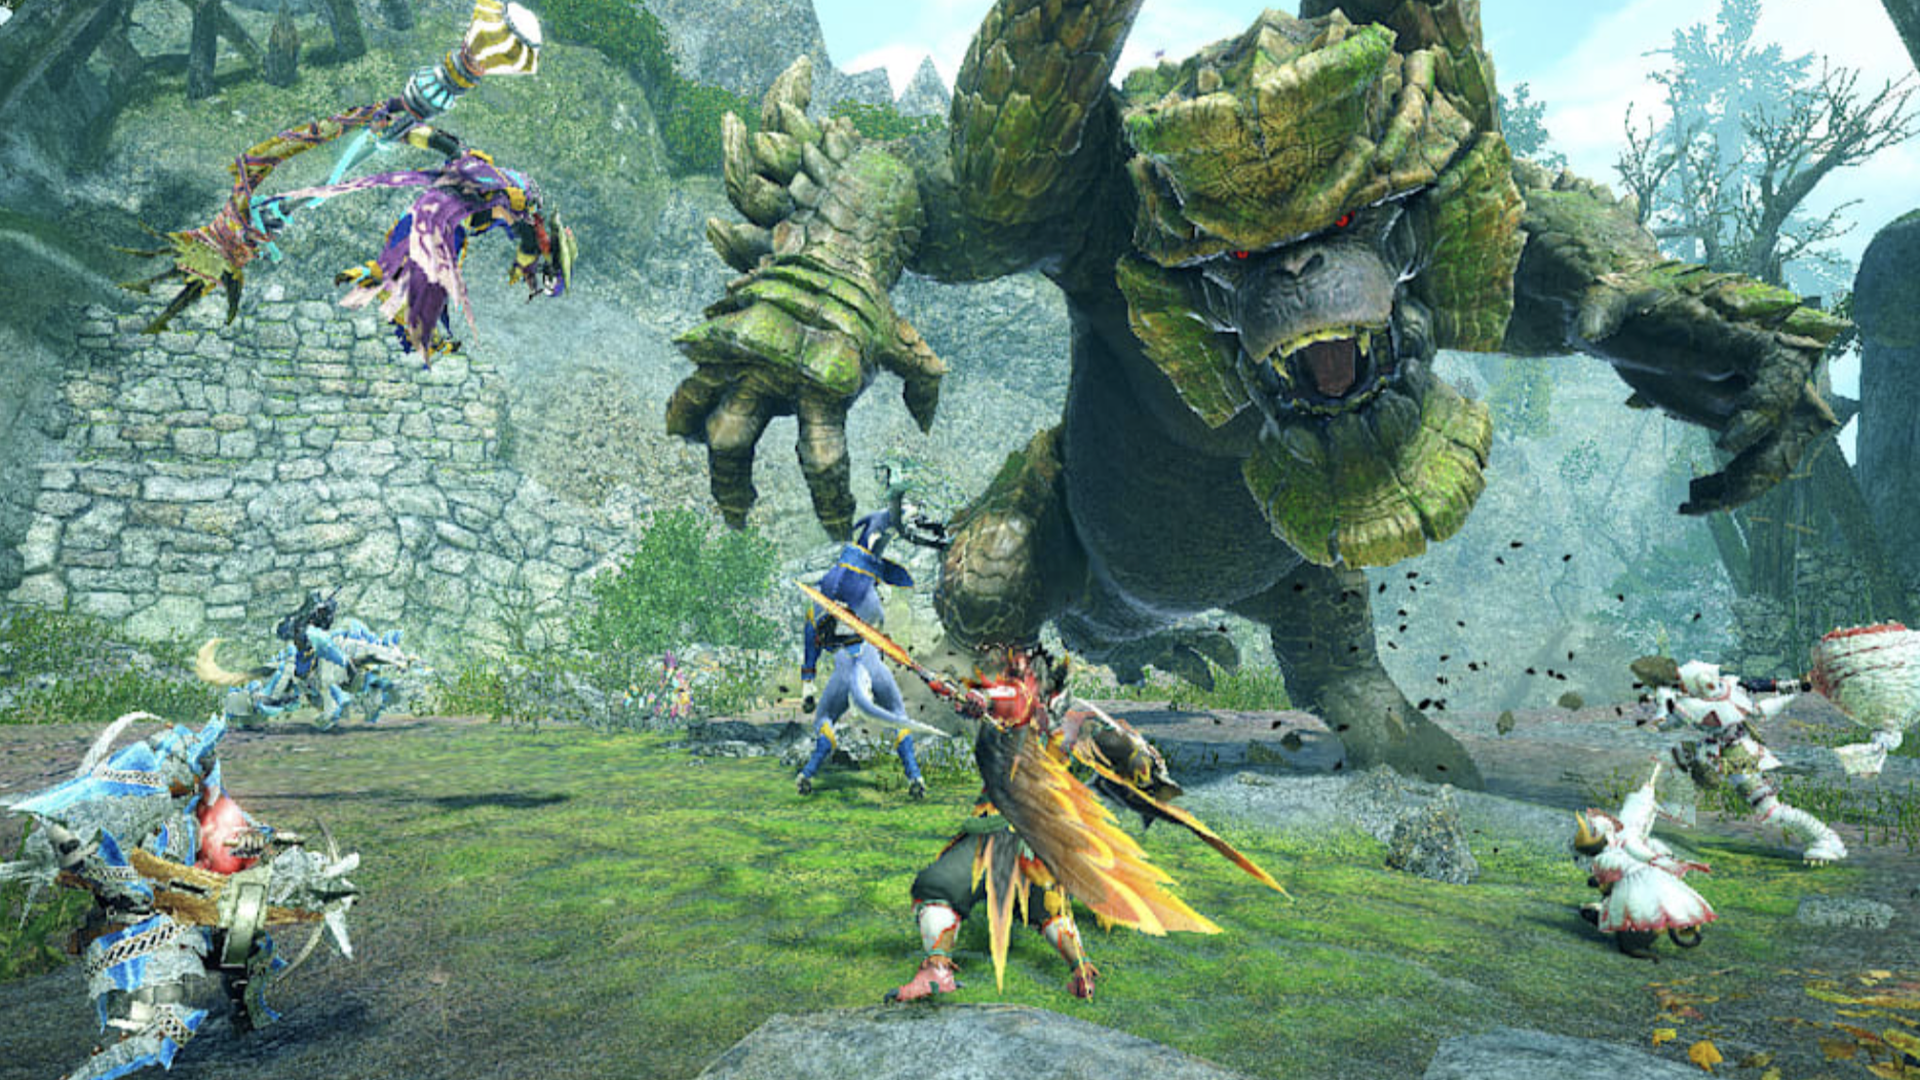 Video game screenshot of armored warriors surrounding a green monster